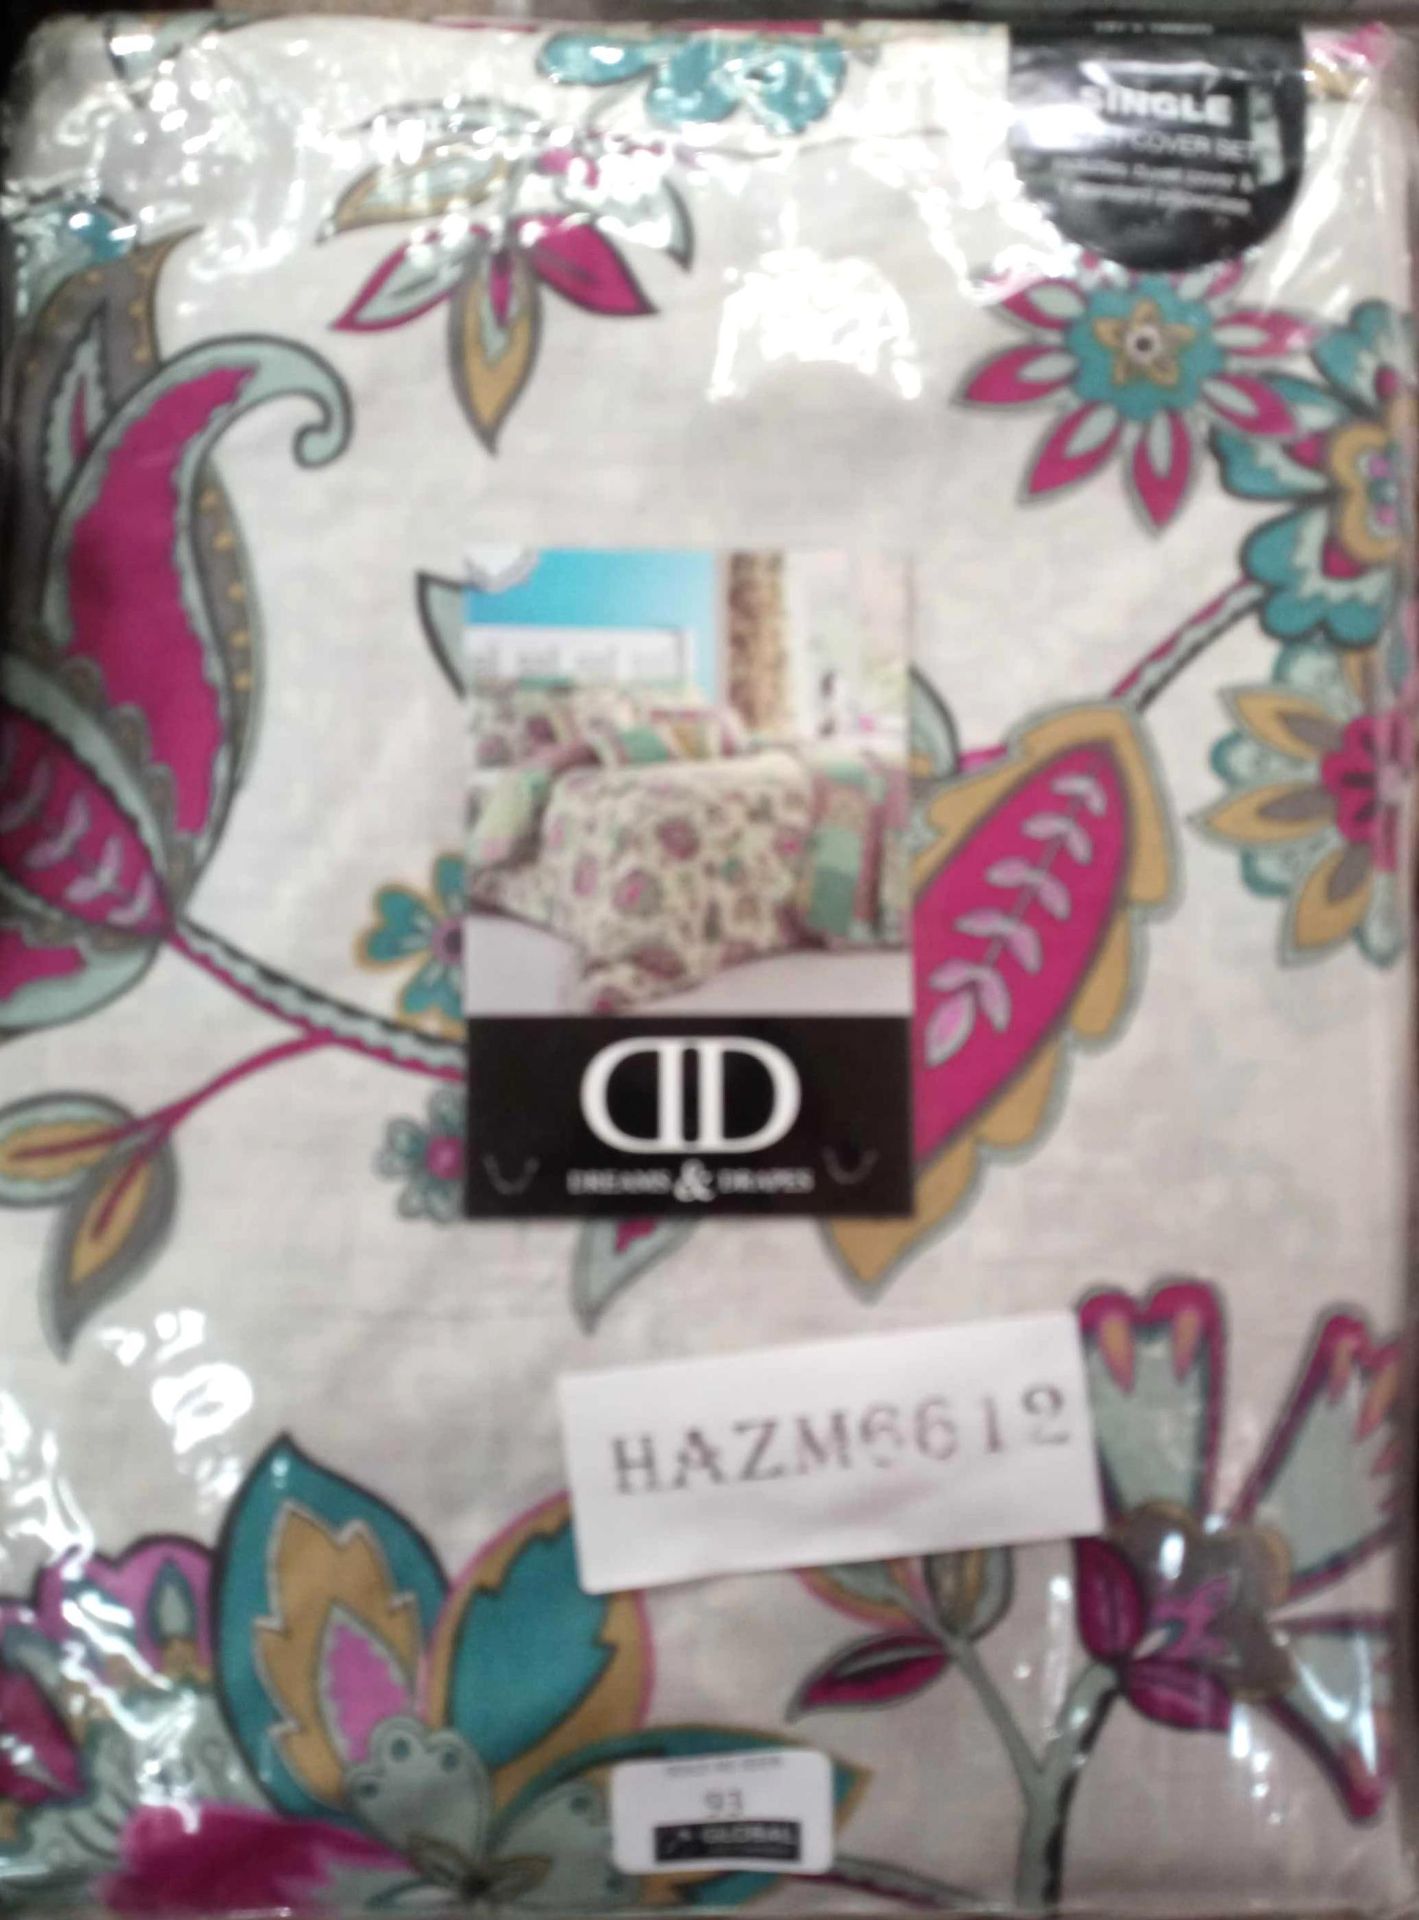 Dreams & drapes floral multi-coloured single duvet cover set